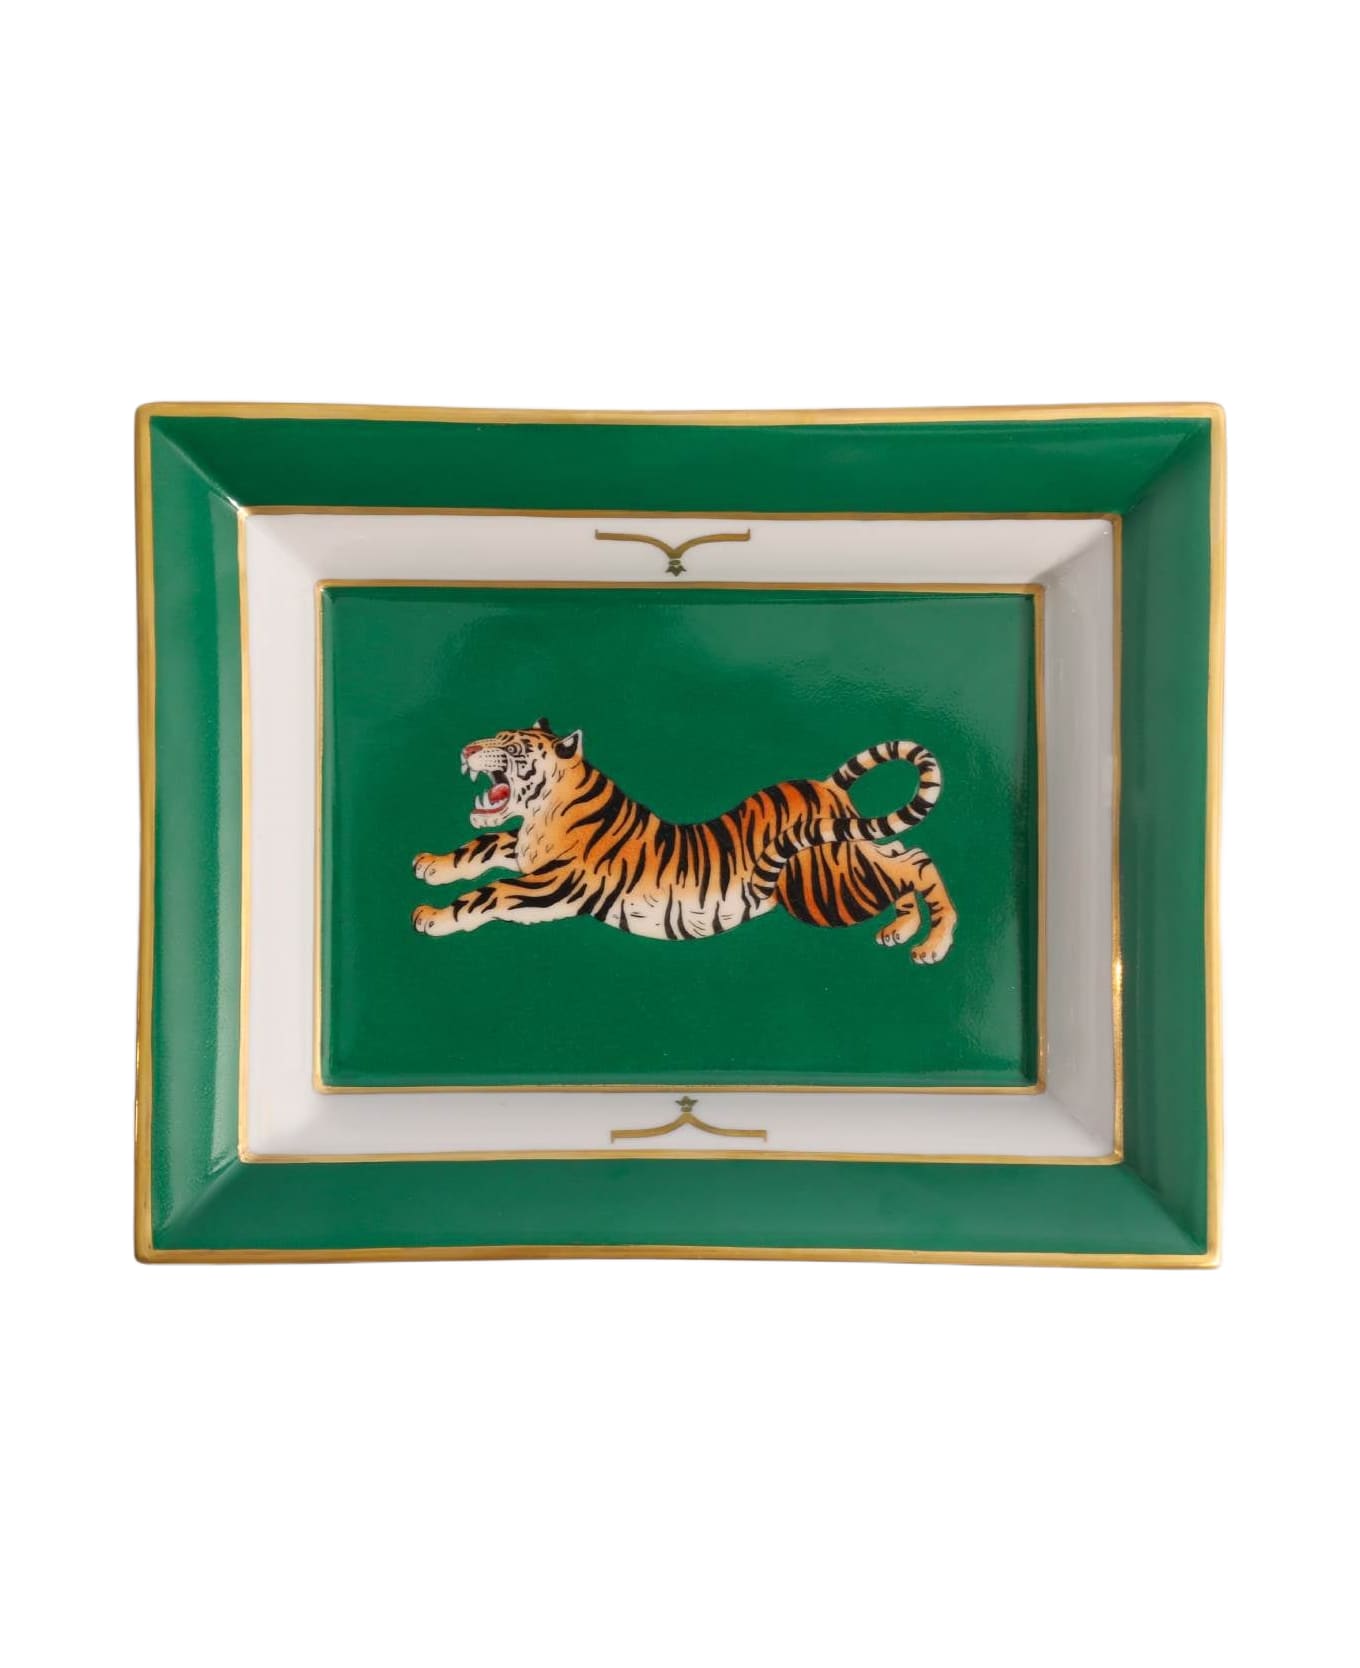 Larusmiani Pocket Emptier "tigre"  - Green